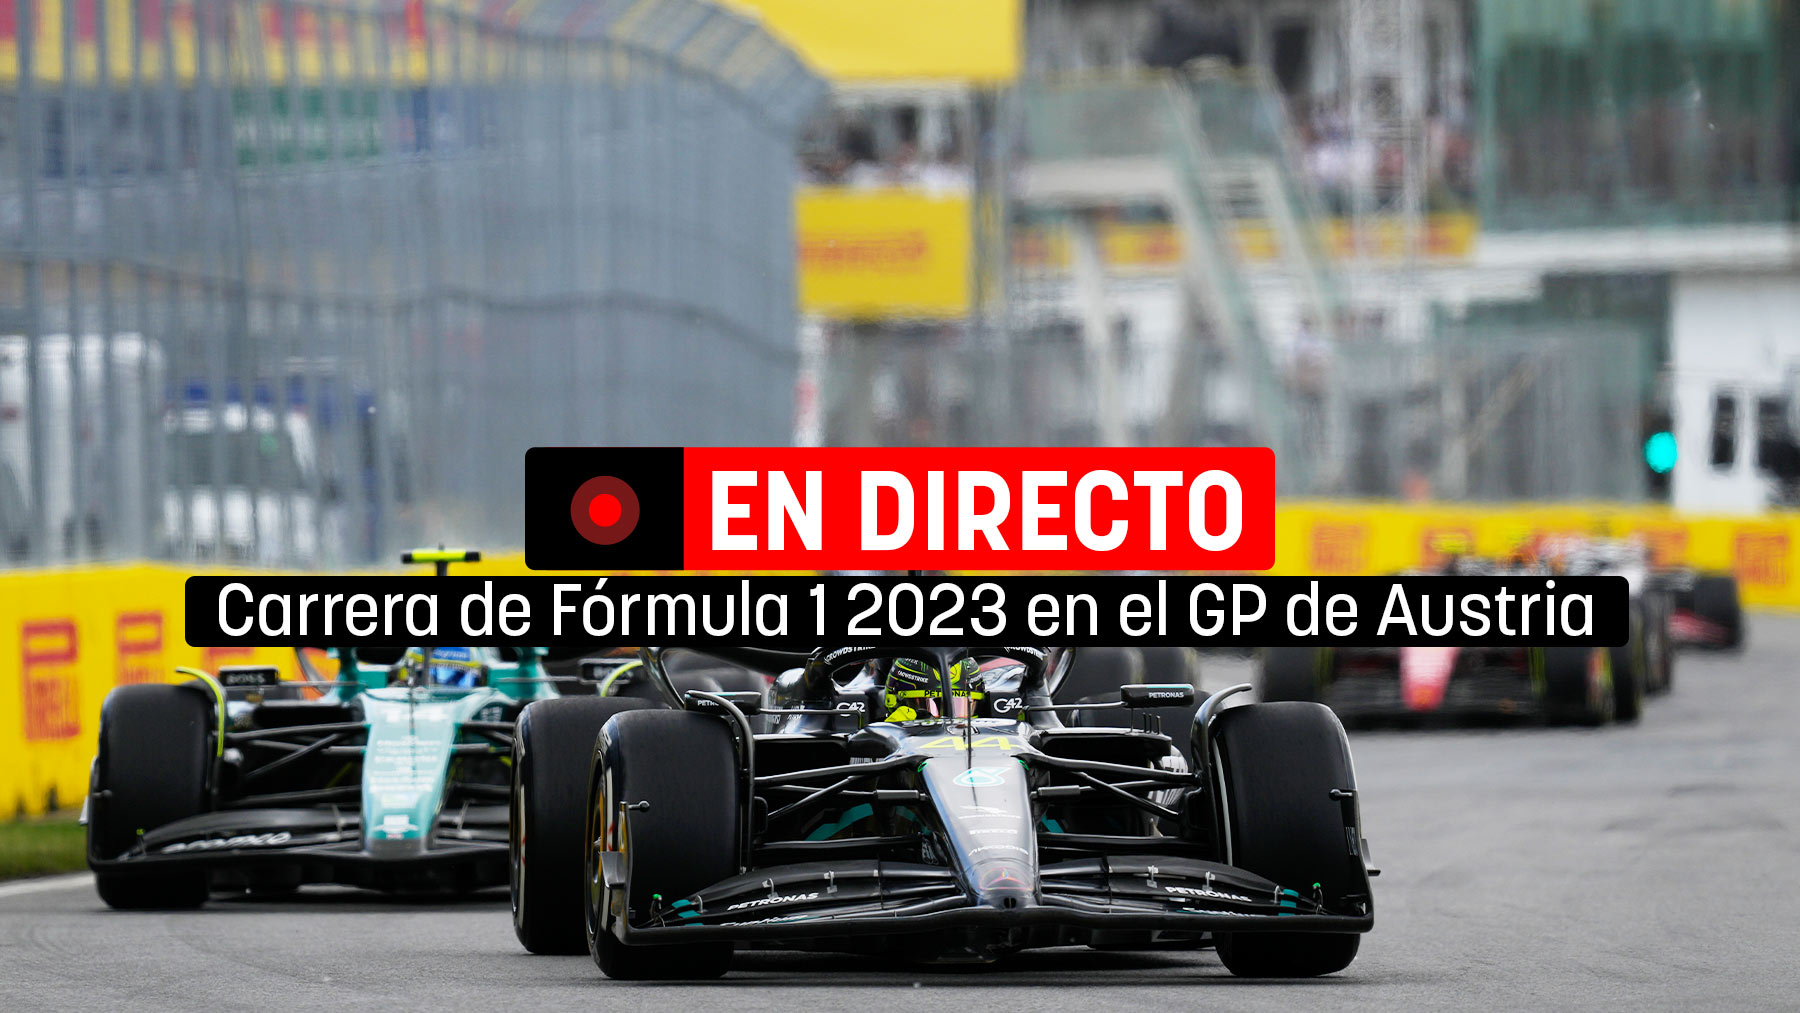 GP de Austria de F1 2023 online en directo | Carrera de Fórmula 1 hoy en vivo.